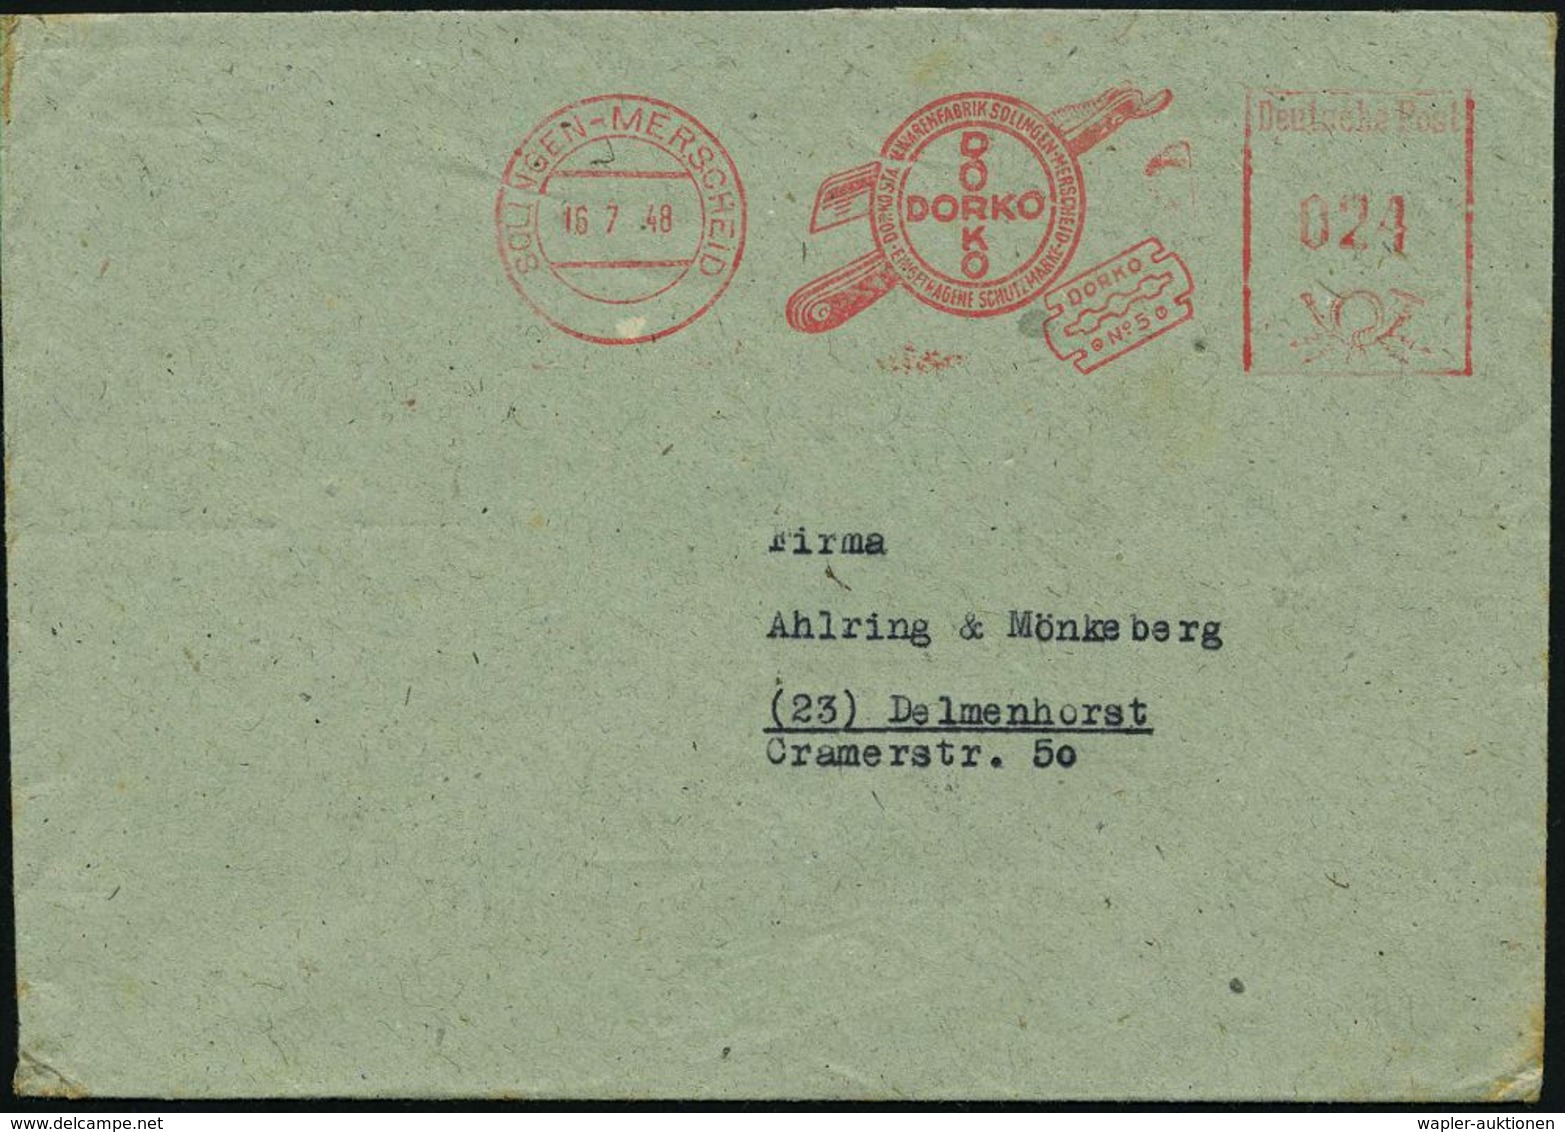 HAAR / BART / RASUR / FRISEUR : SOLINGEN-MERSCHEID/ DORKO STAHLWARENFABRIK.. 1948 (16.7.) AFS = Klapp-Rasiermesse (u. Ra - Pharmacie